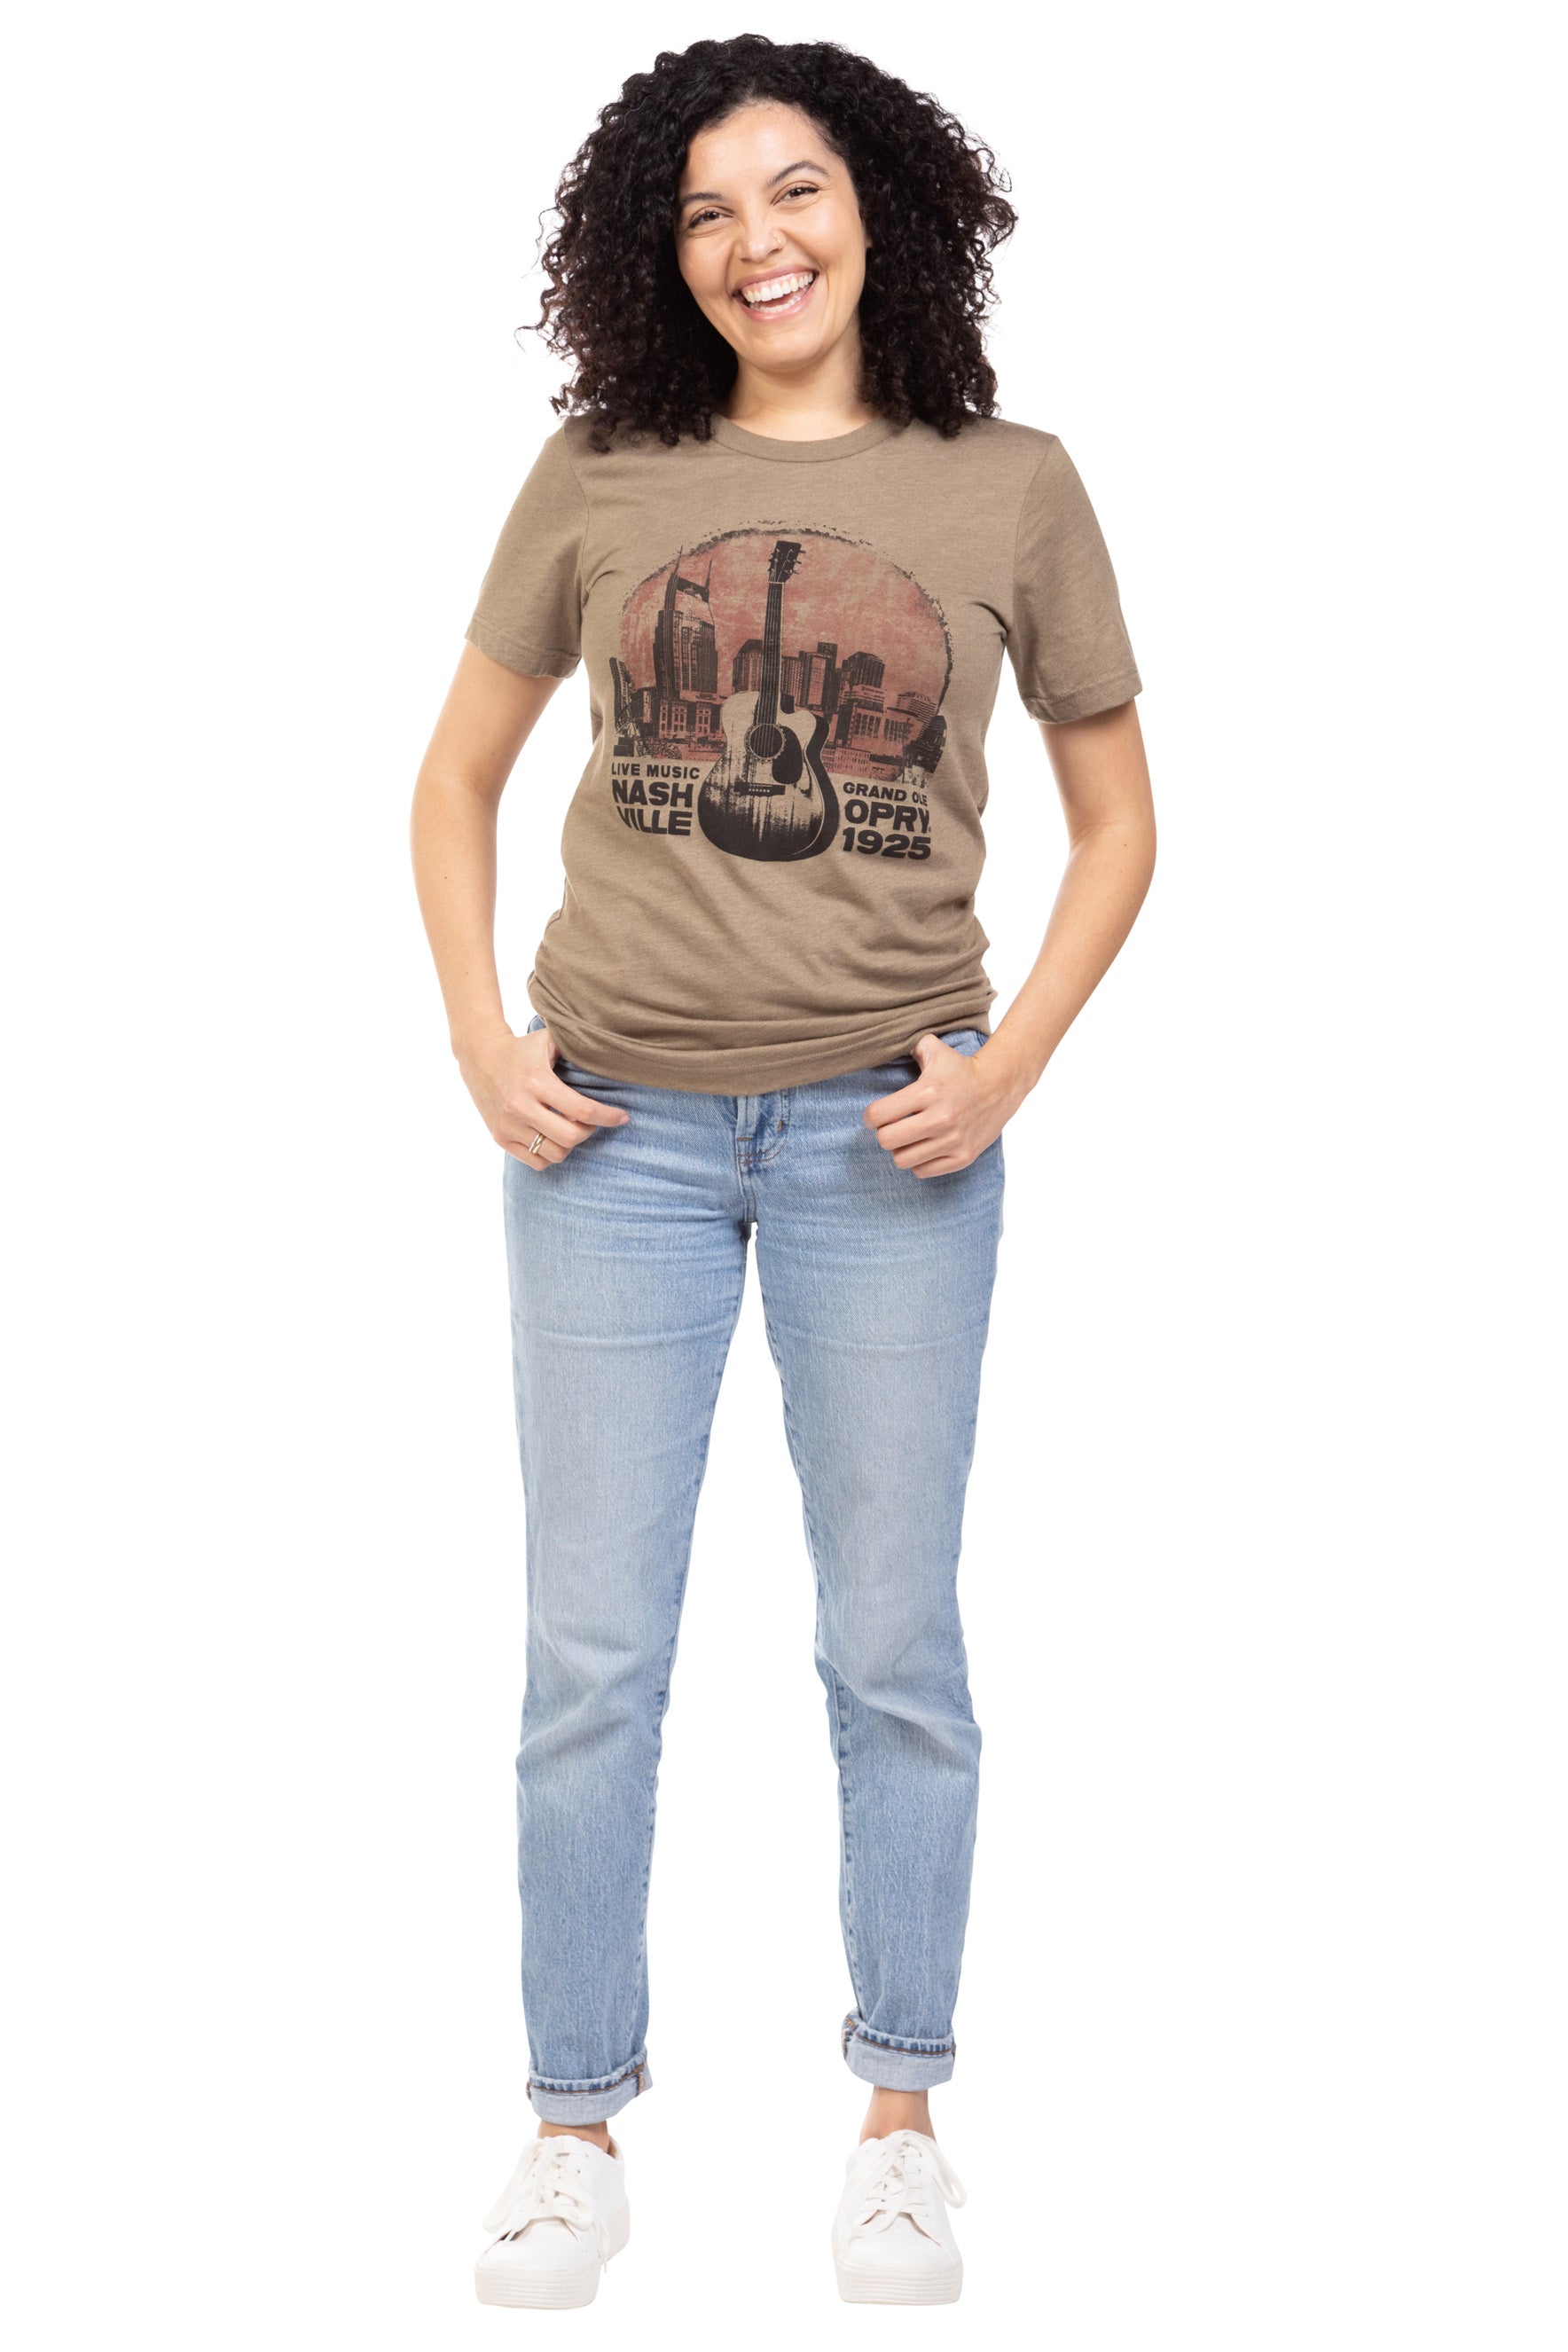 Opry Nashville Skyline Unisex T-Shirt